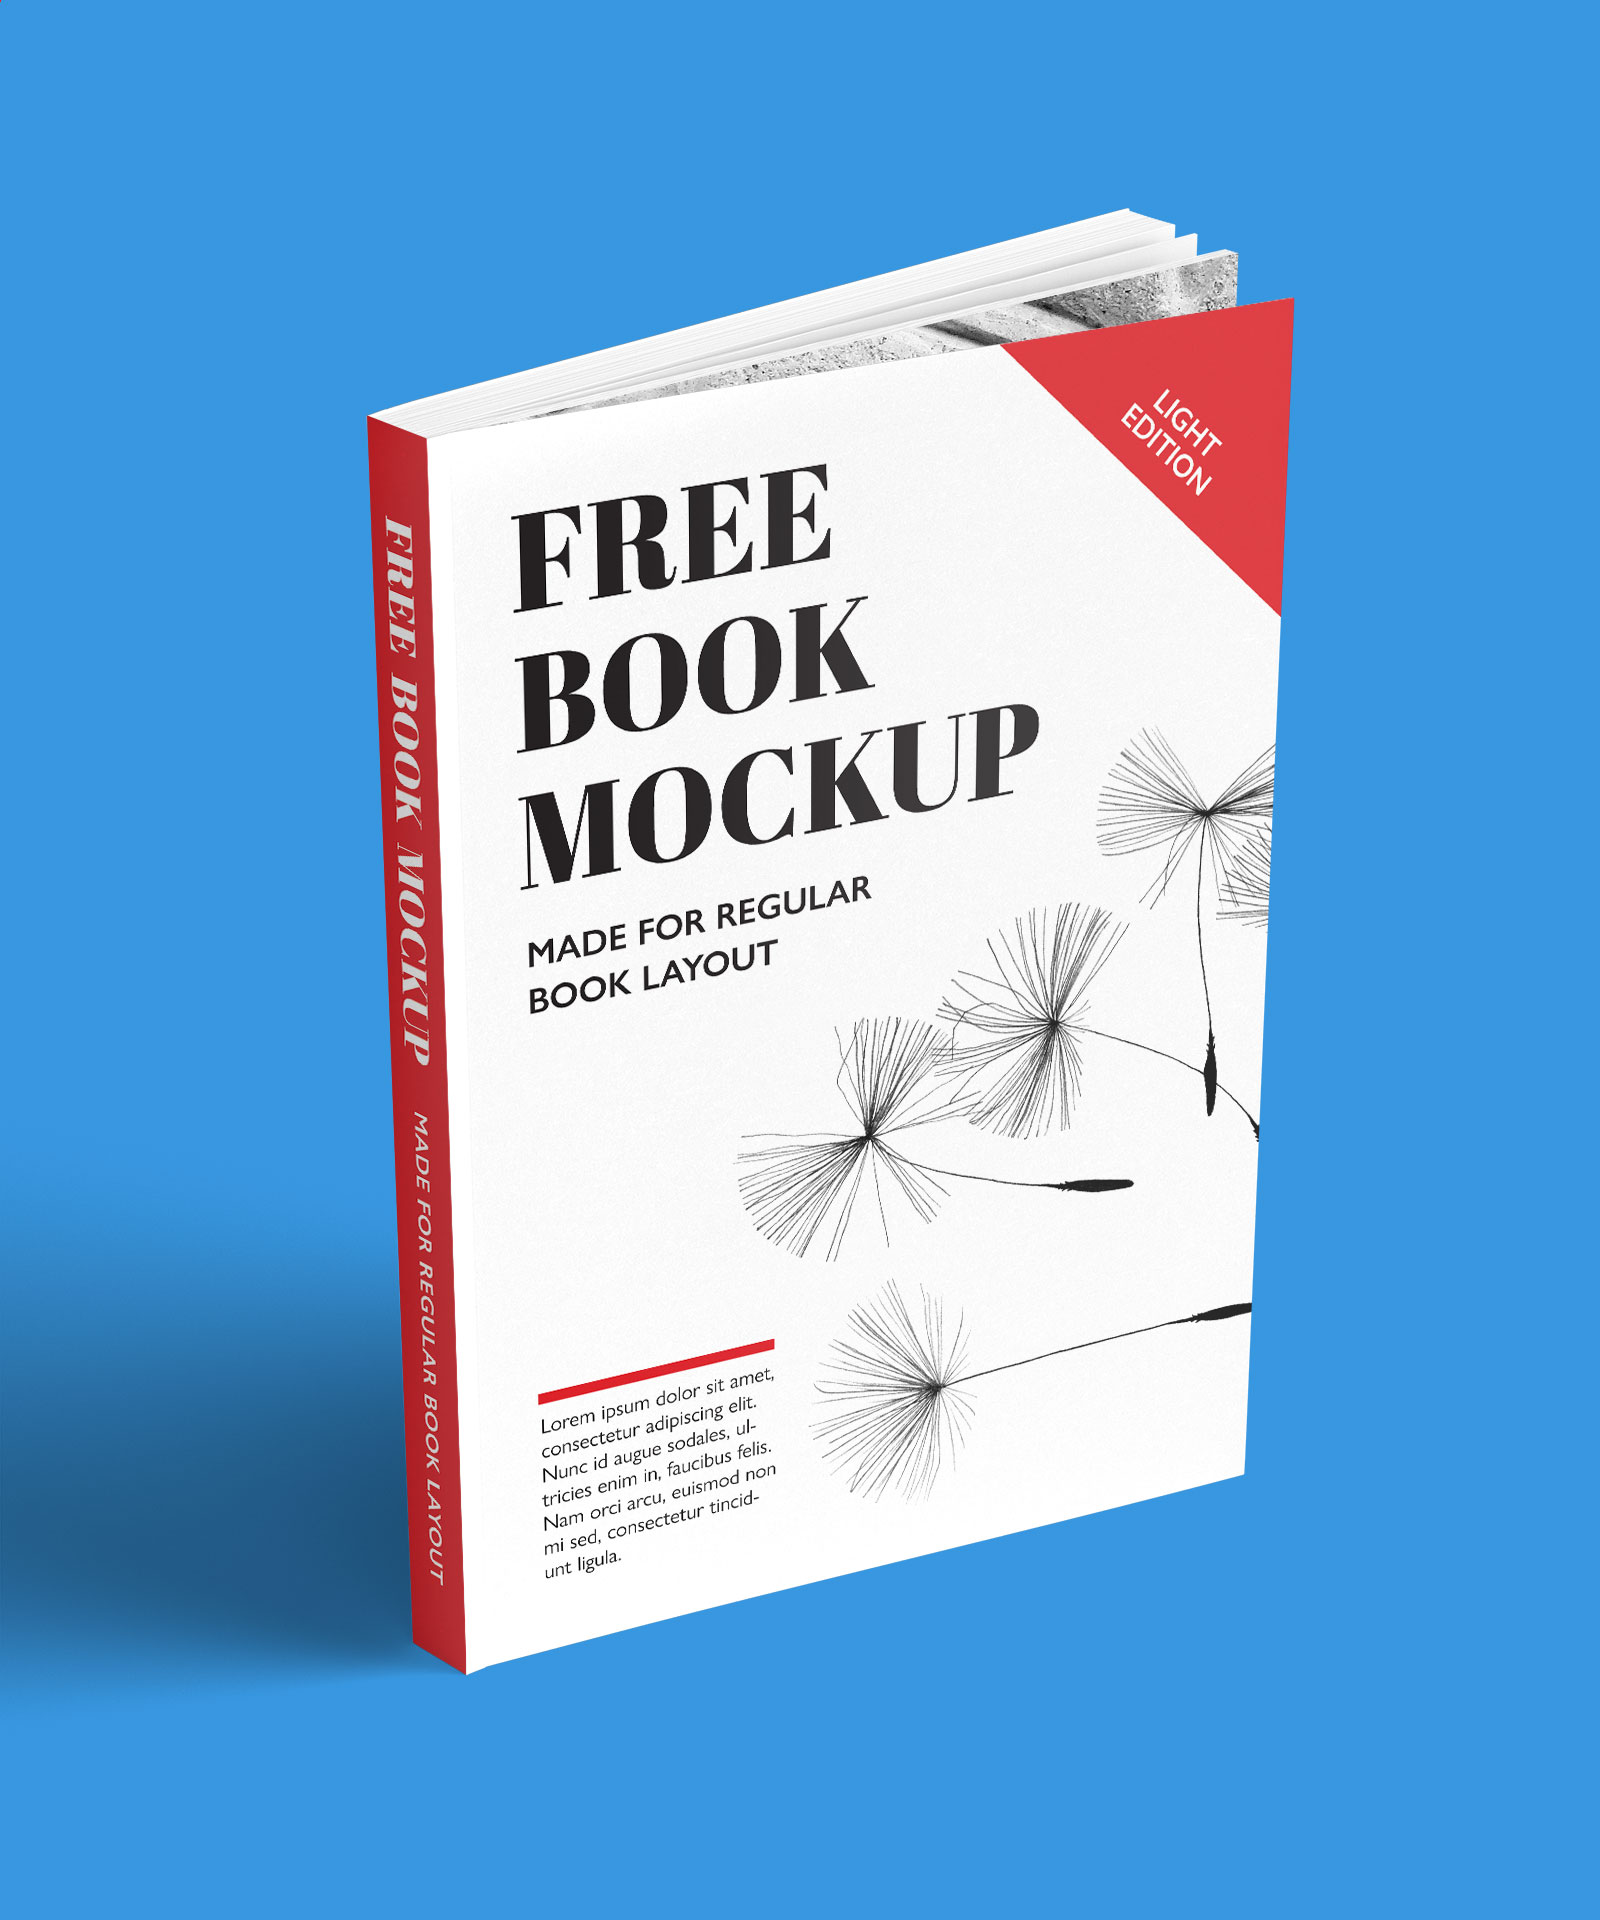 Free Paperback Book Mockup PSD